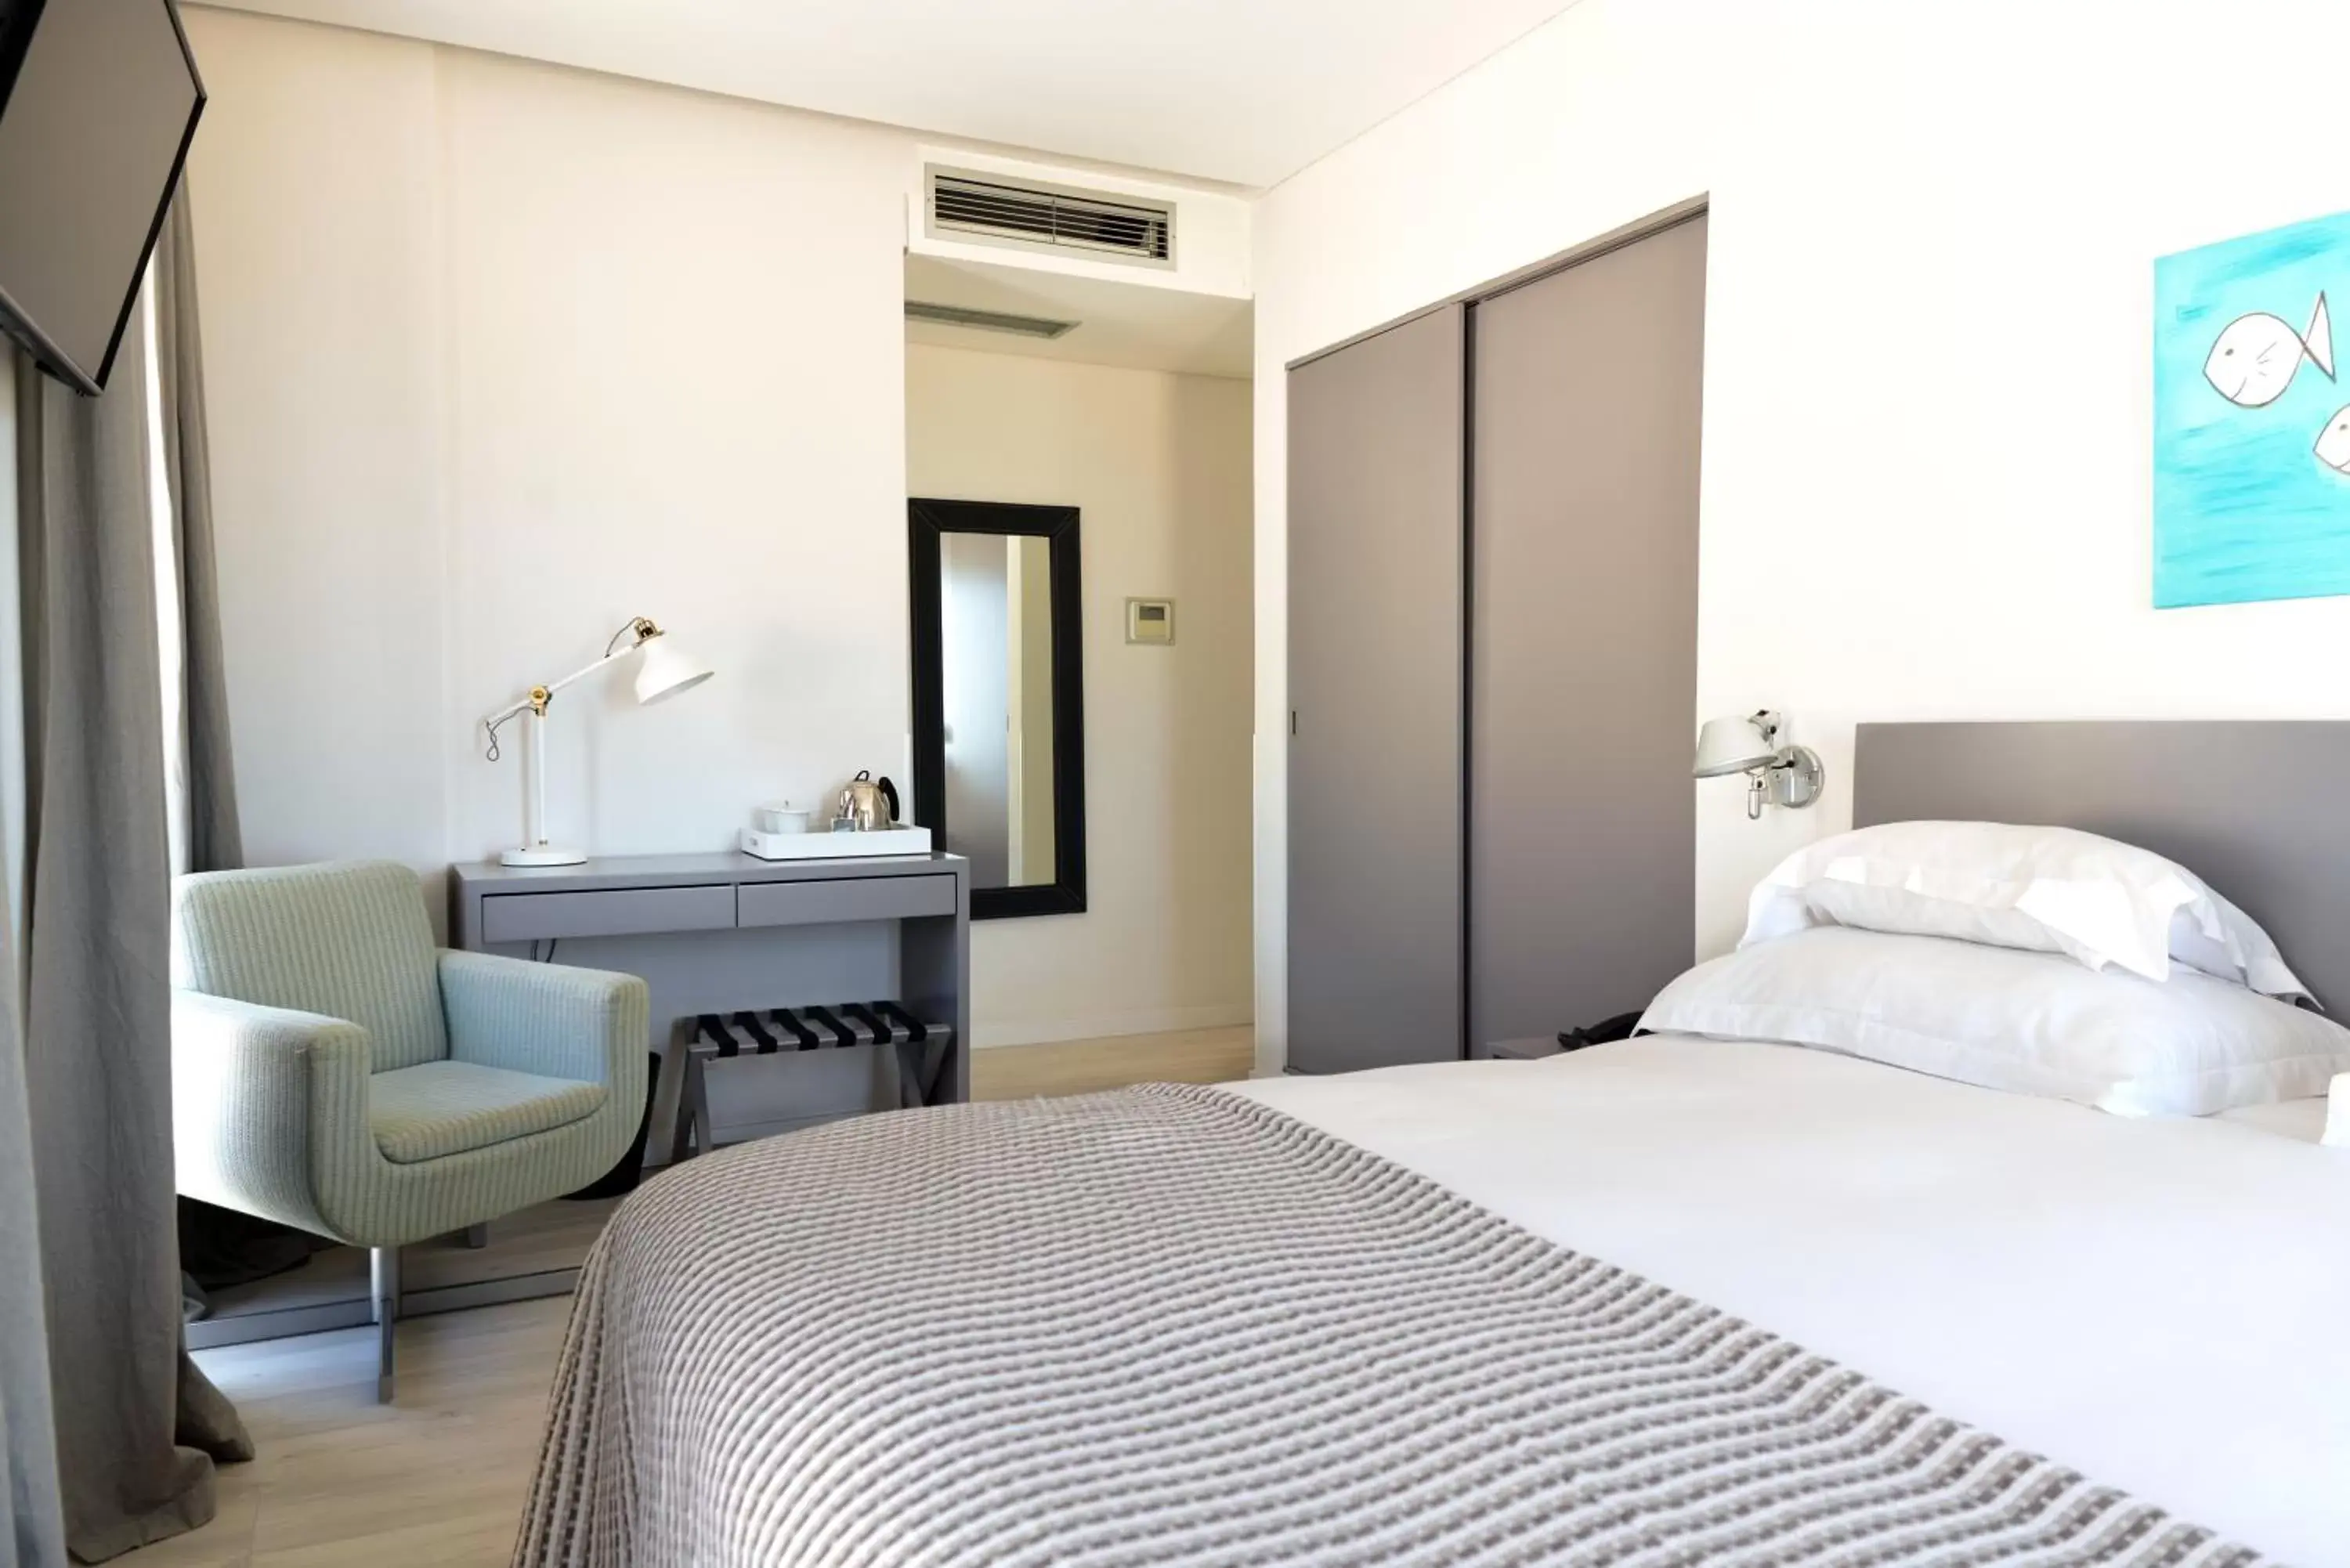 Bed, Room Photo in Hotel Mar Bravo